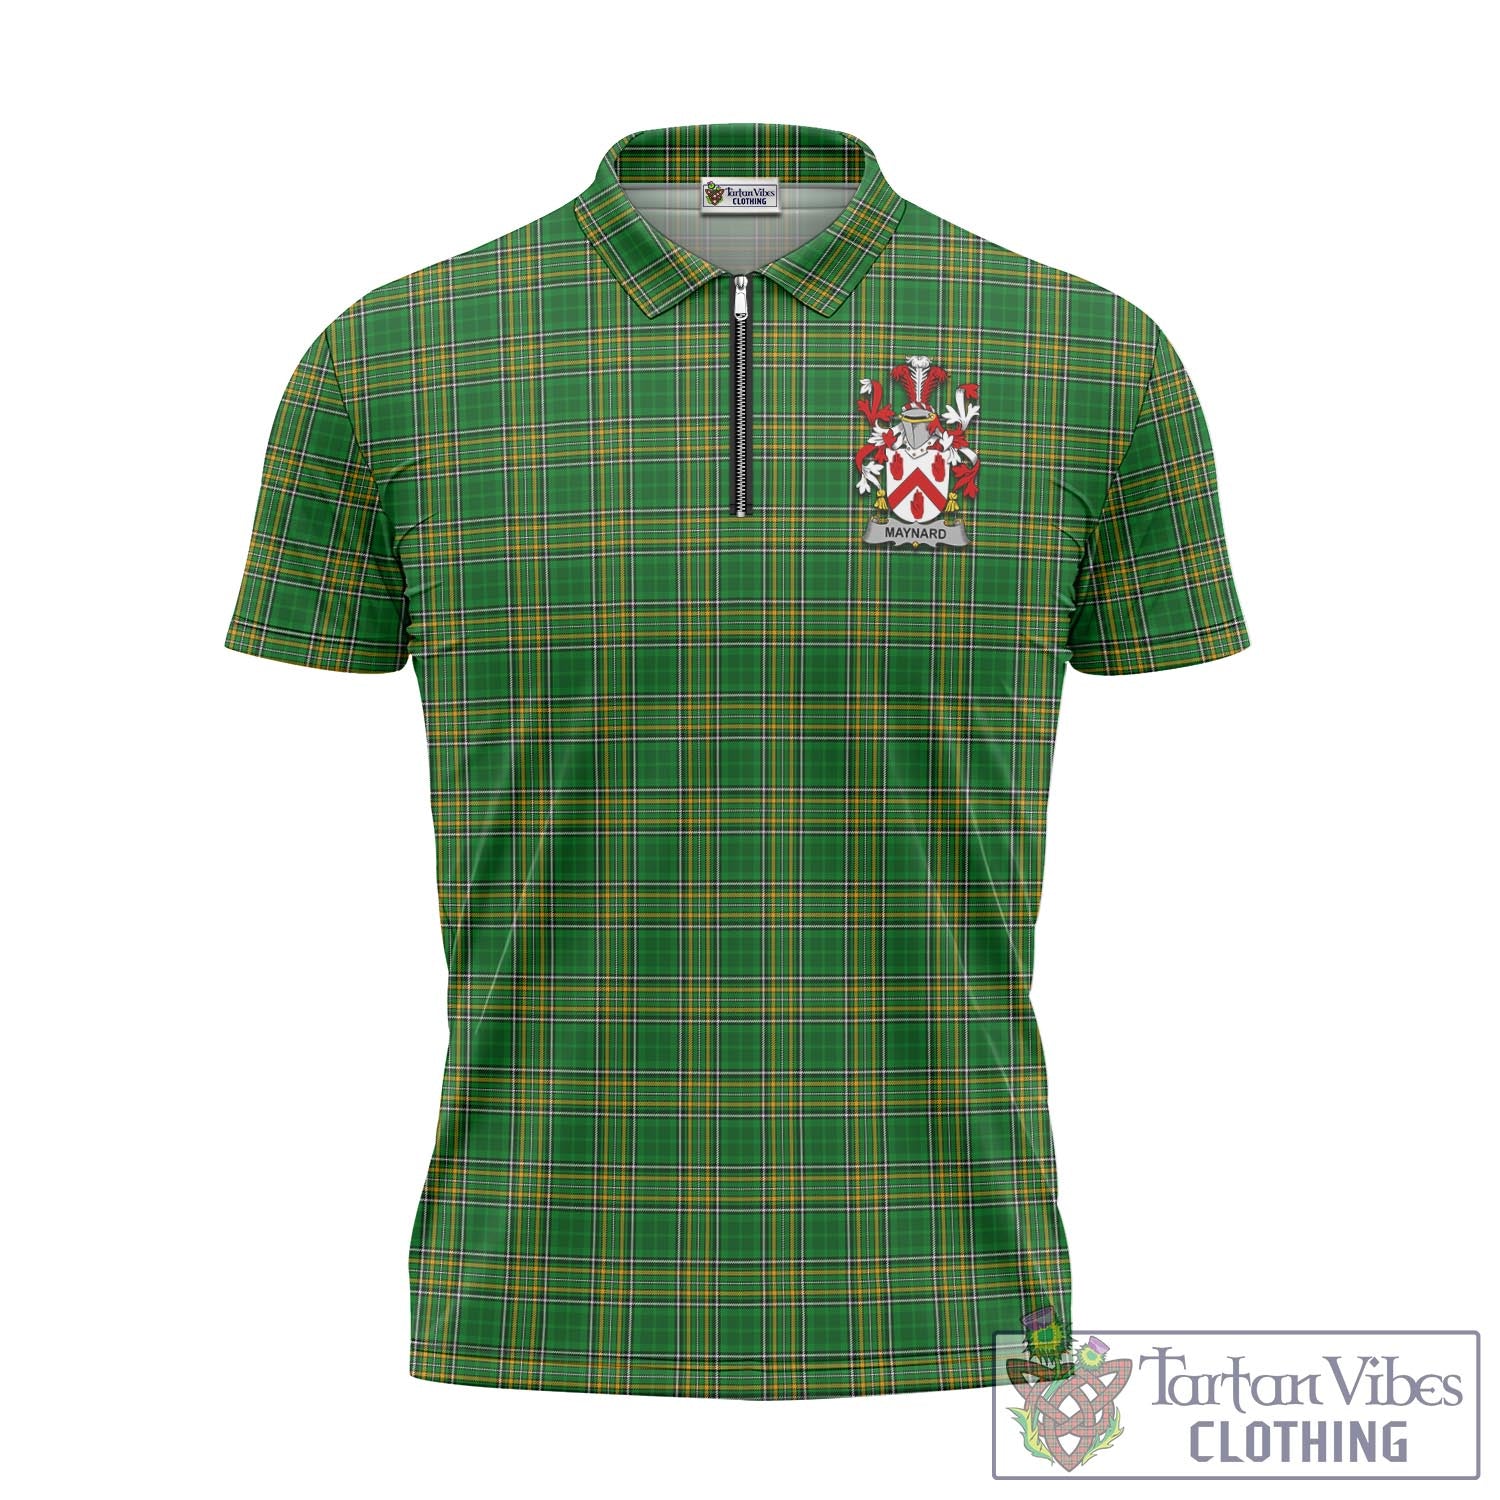 Tartan Vibes Clothing Maynard Ireland Clan Tartan Zipper Polo Shirt with Coat of Arms